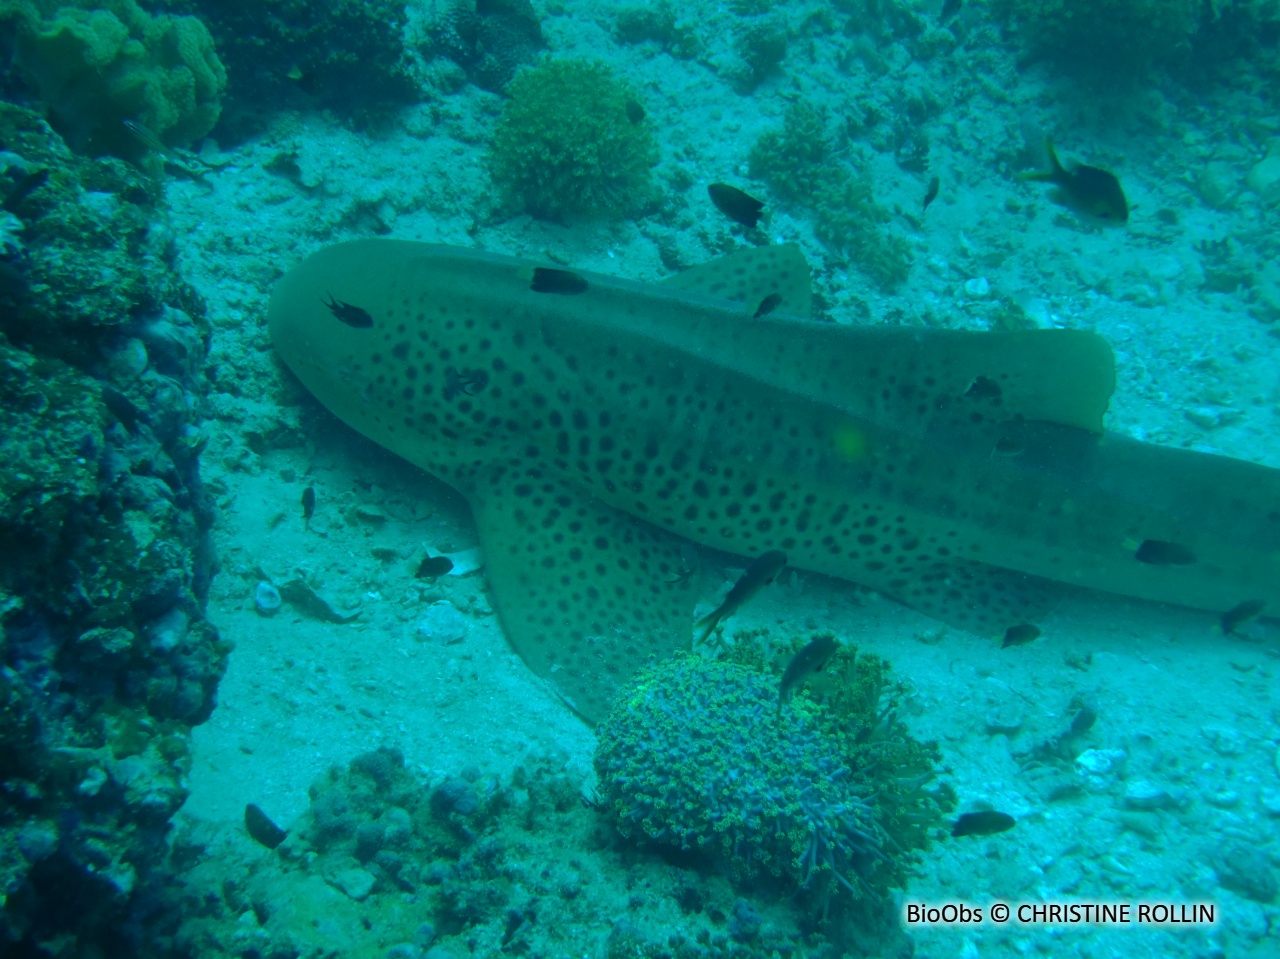 Requin zèbre - Stegostoma fasciatum - CHRISTINE ROLLIN - BioObs